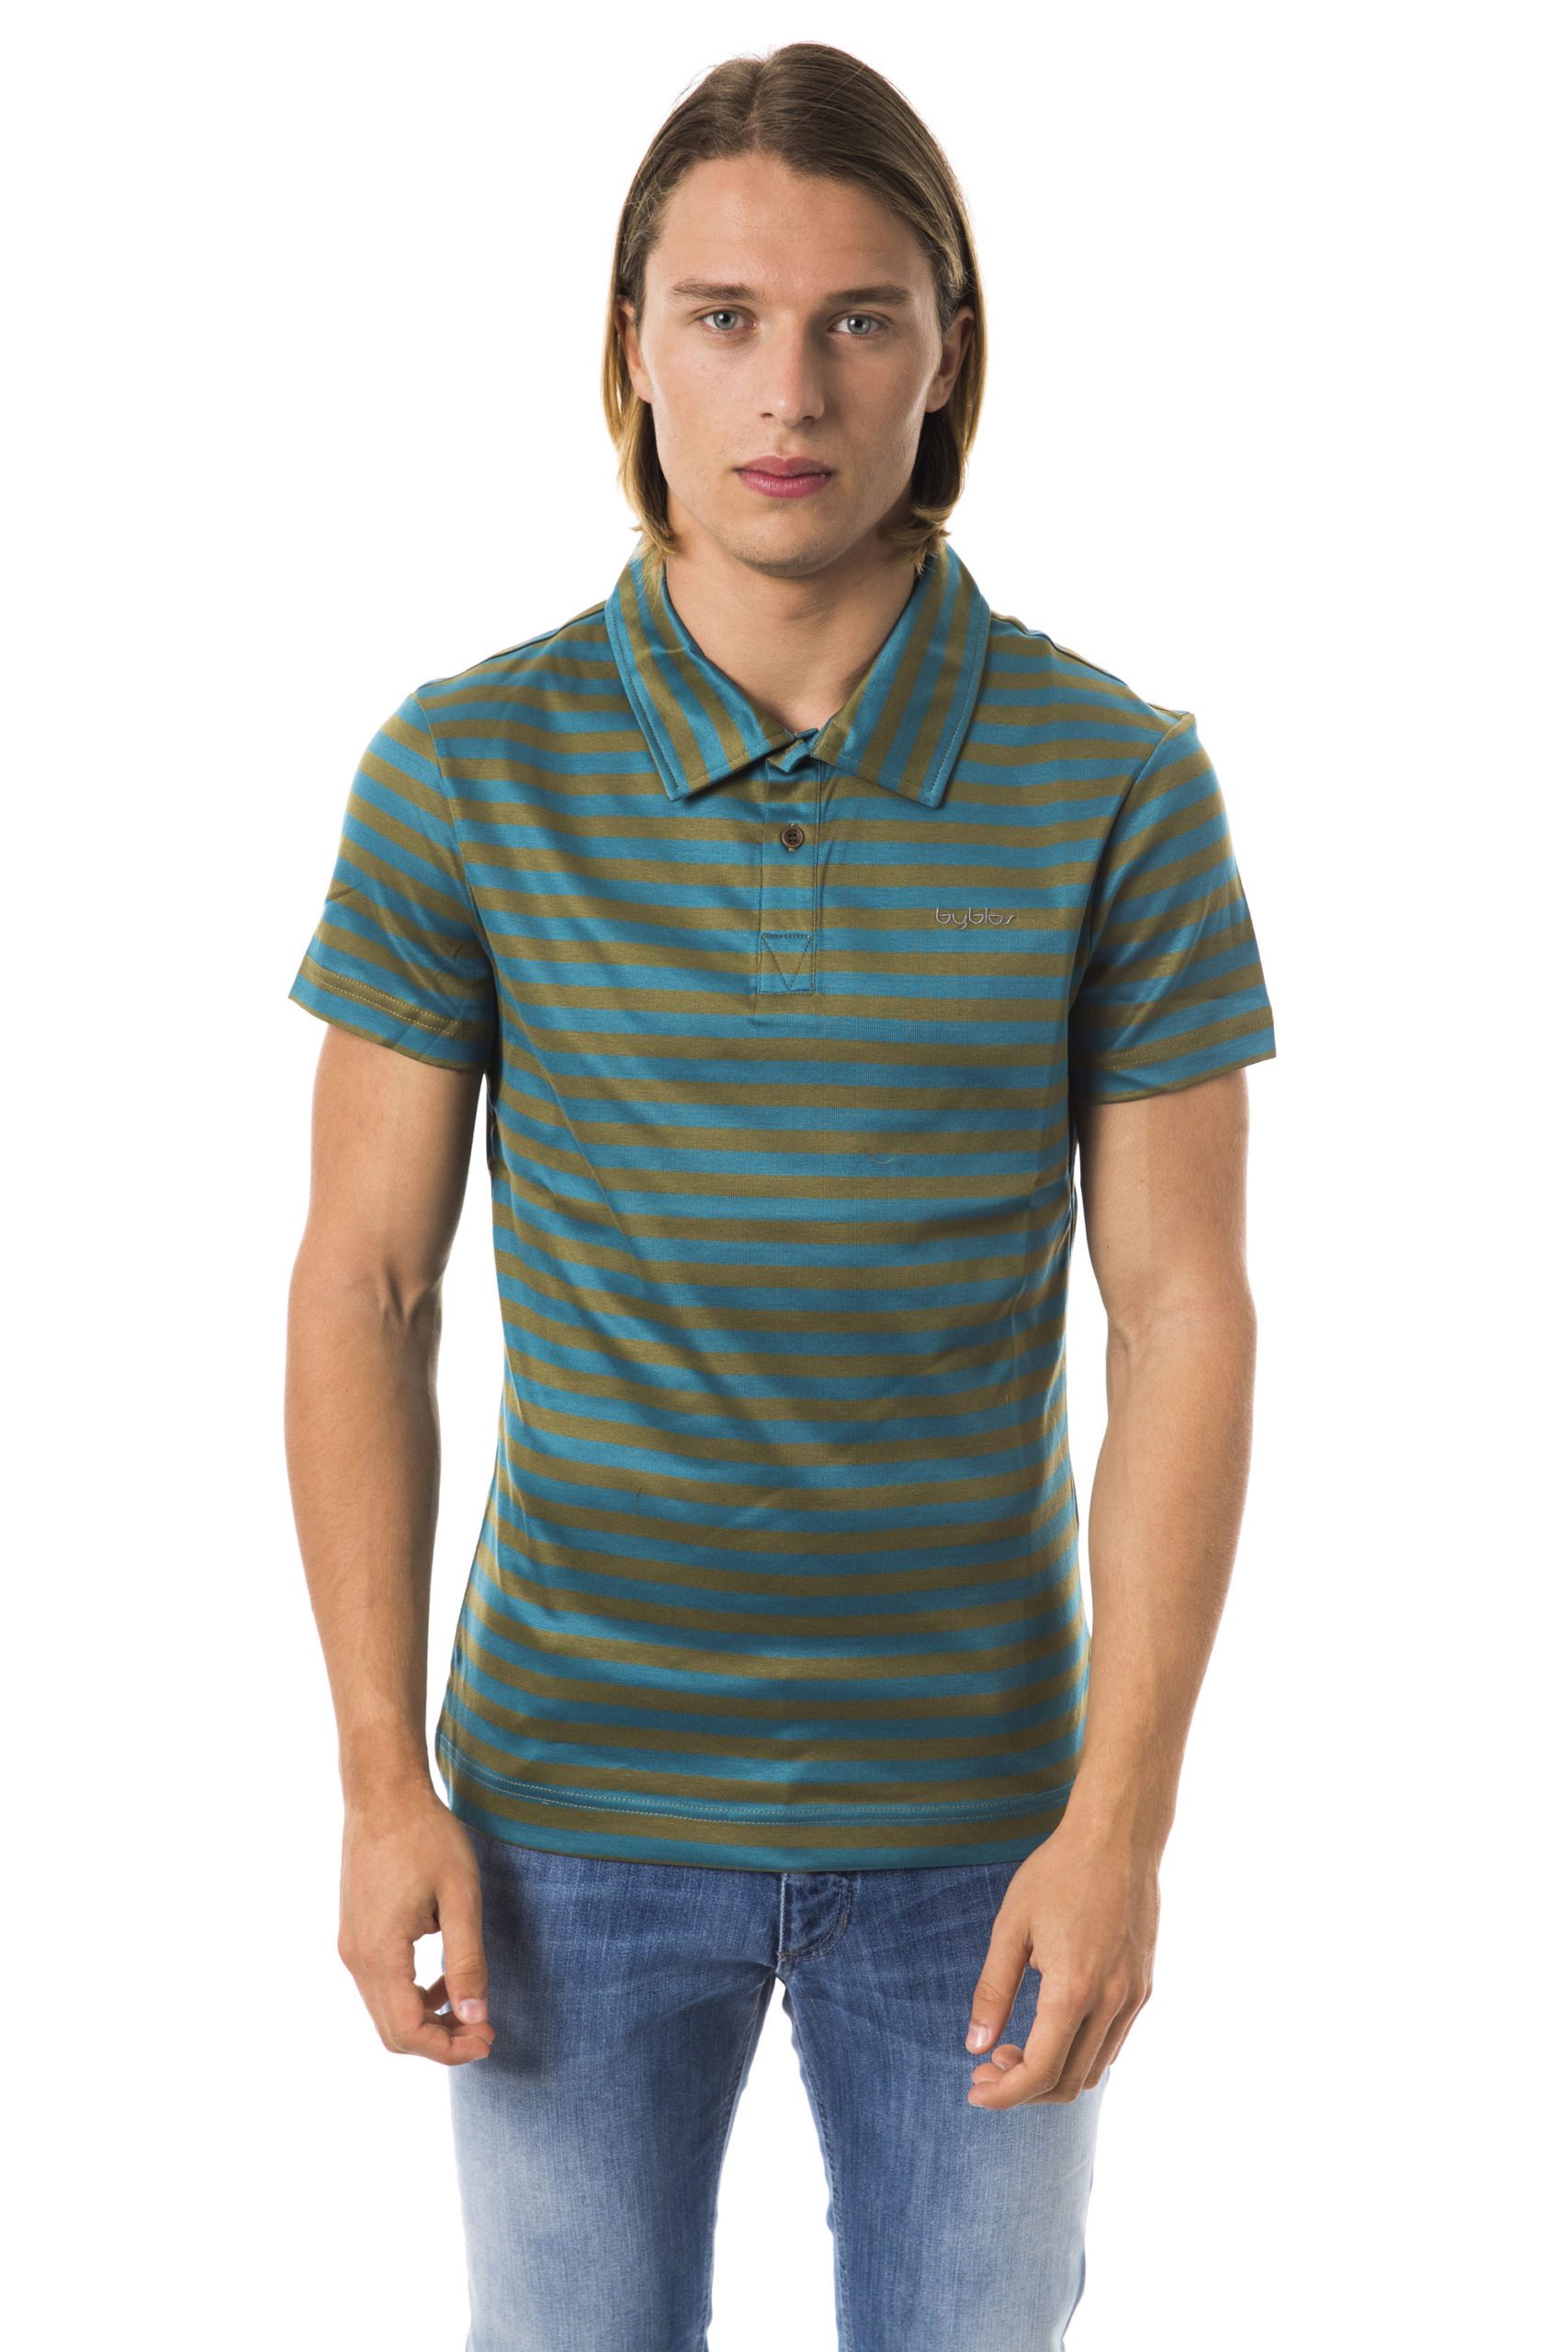 BYBLOS Men's Verdone Polo Shirt Green BY997226 - L